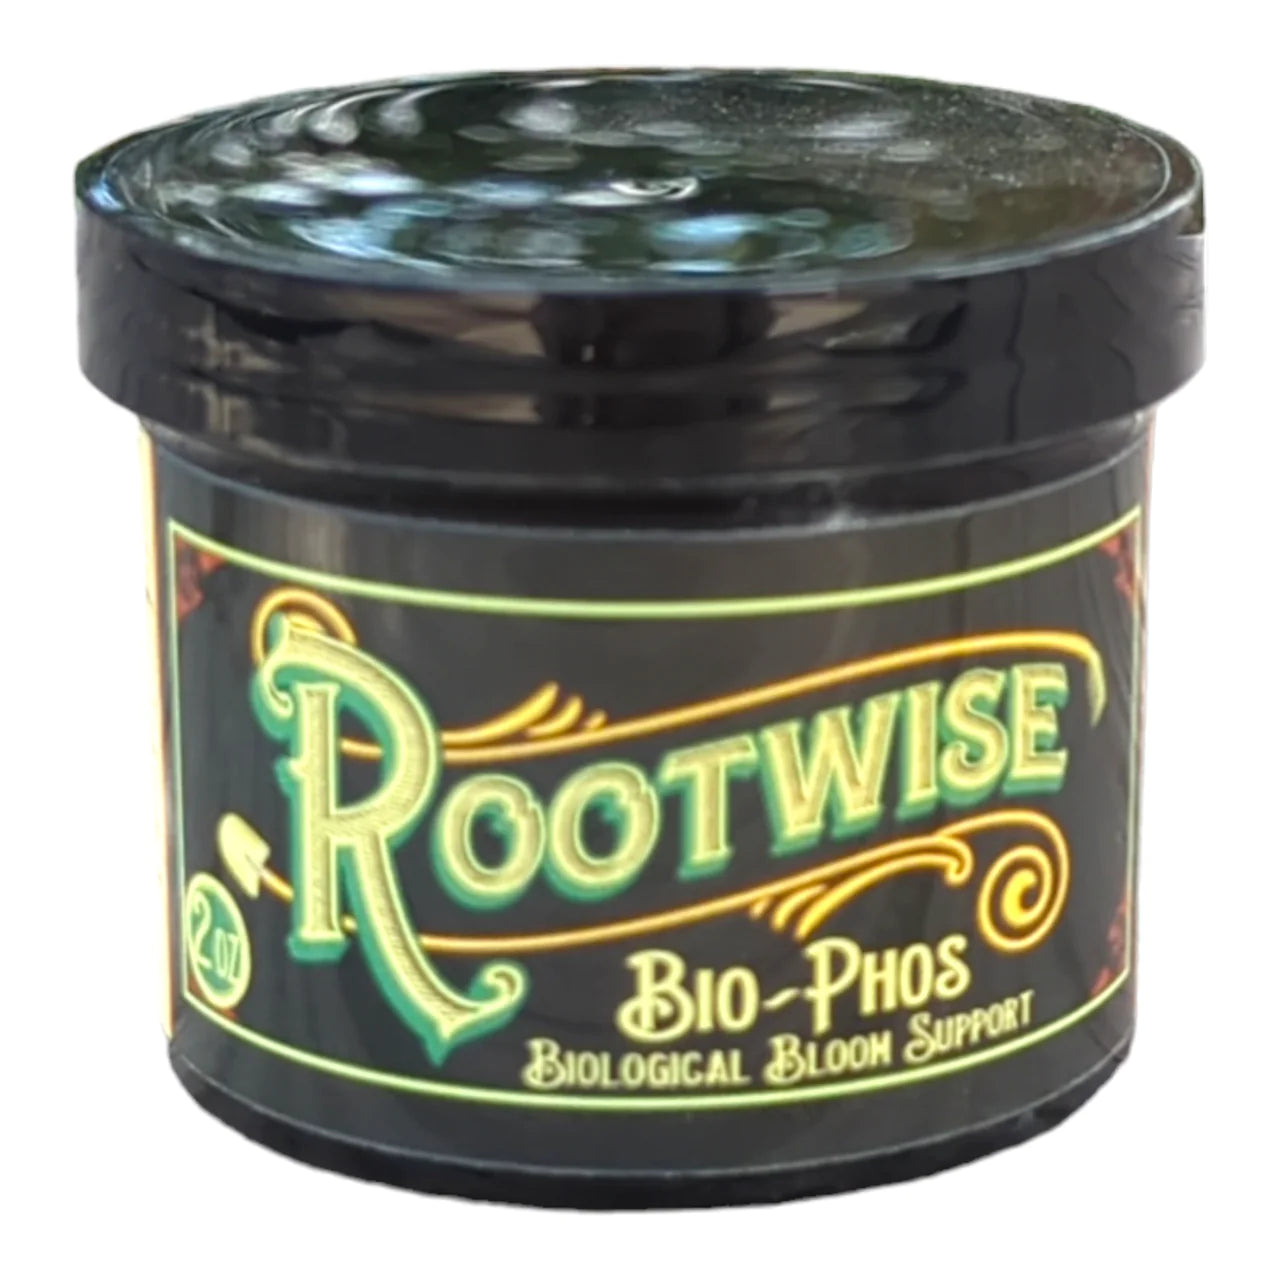 Rootwise Bio-Phos (Biological Bloom Support)